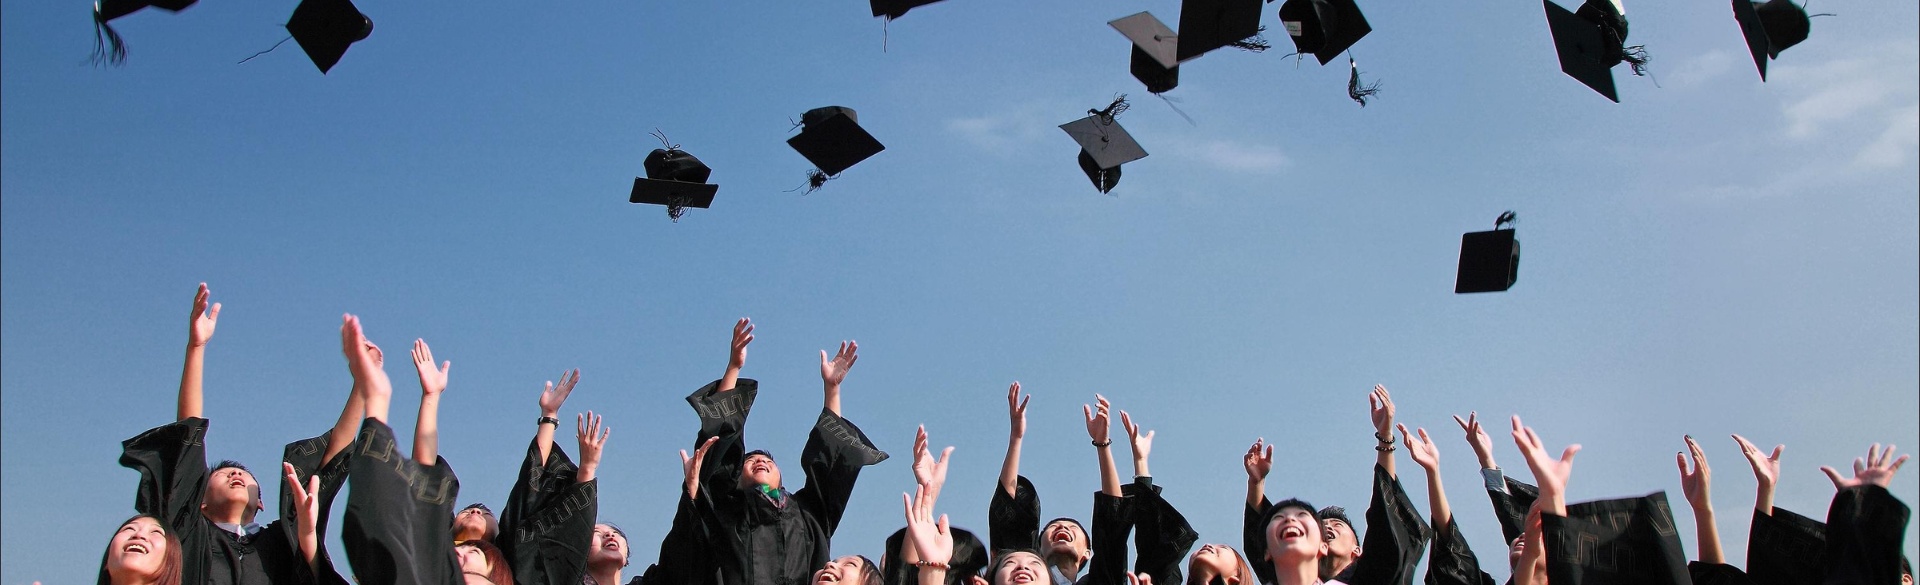 Graduates throwing their caps in the air